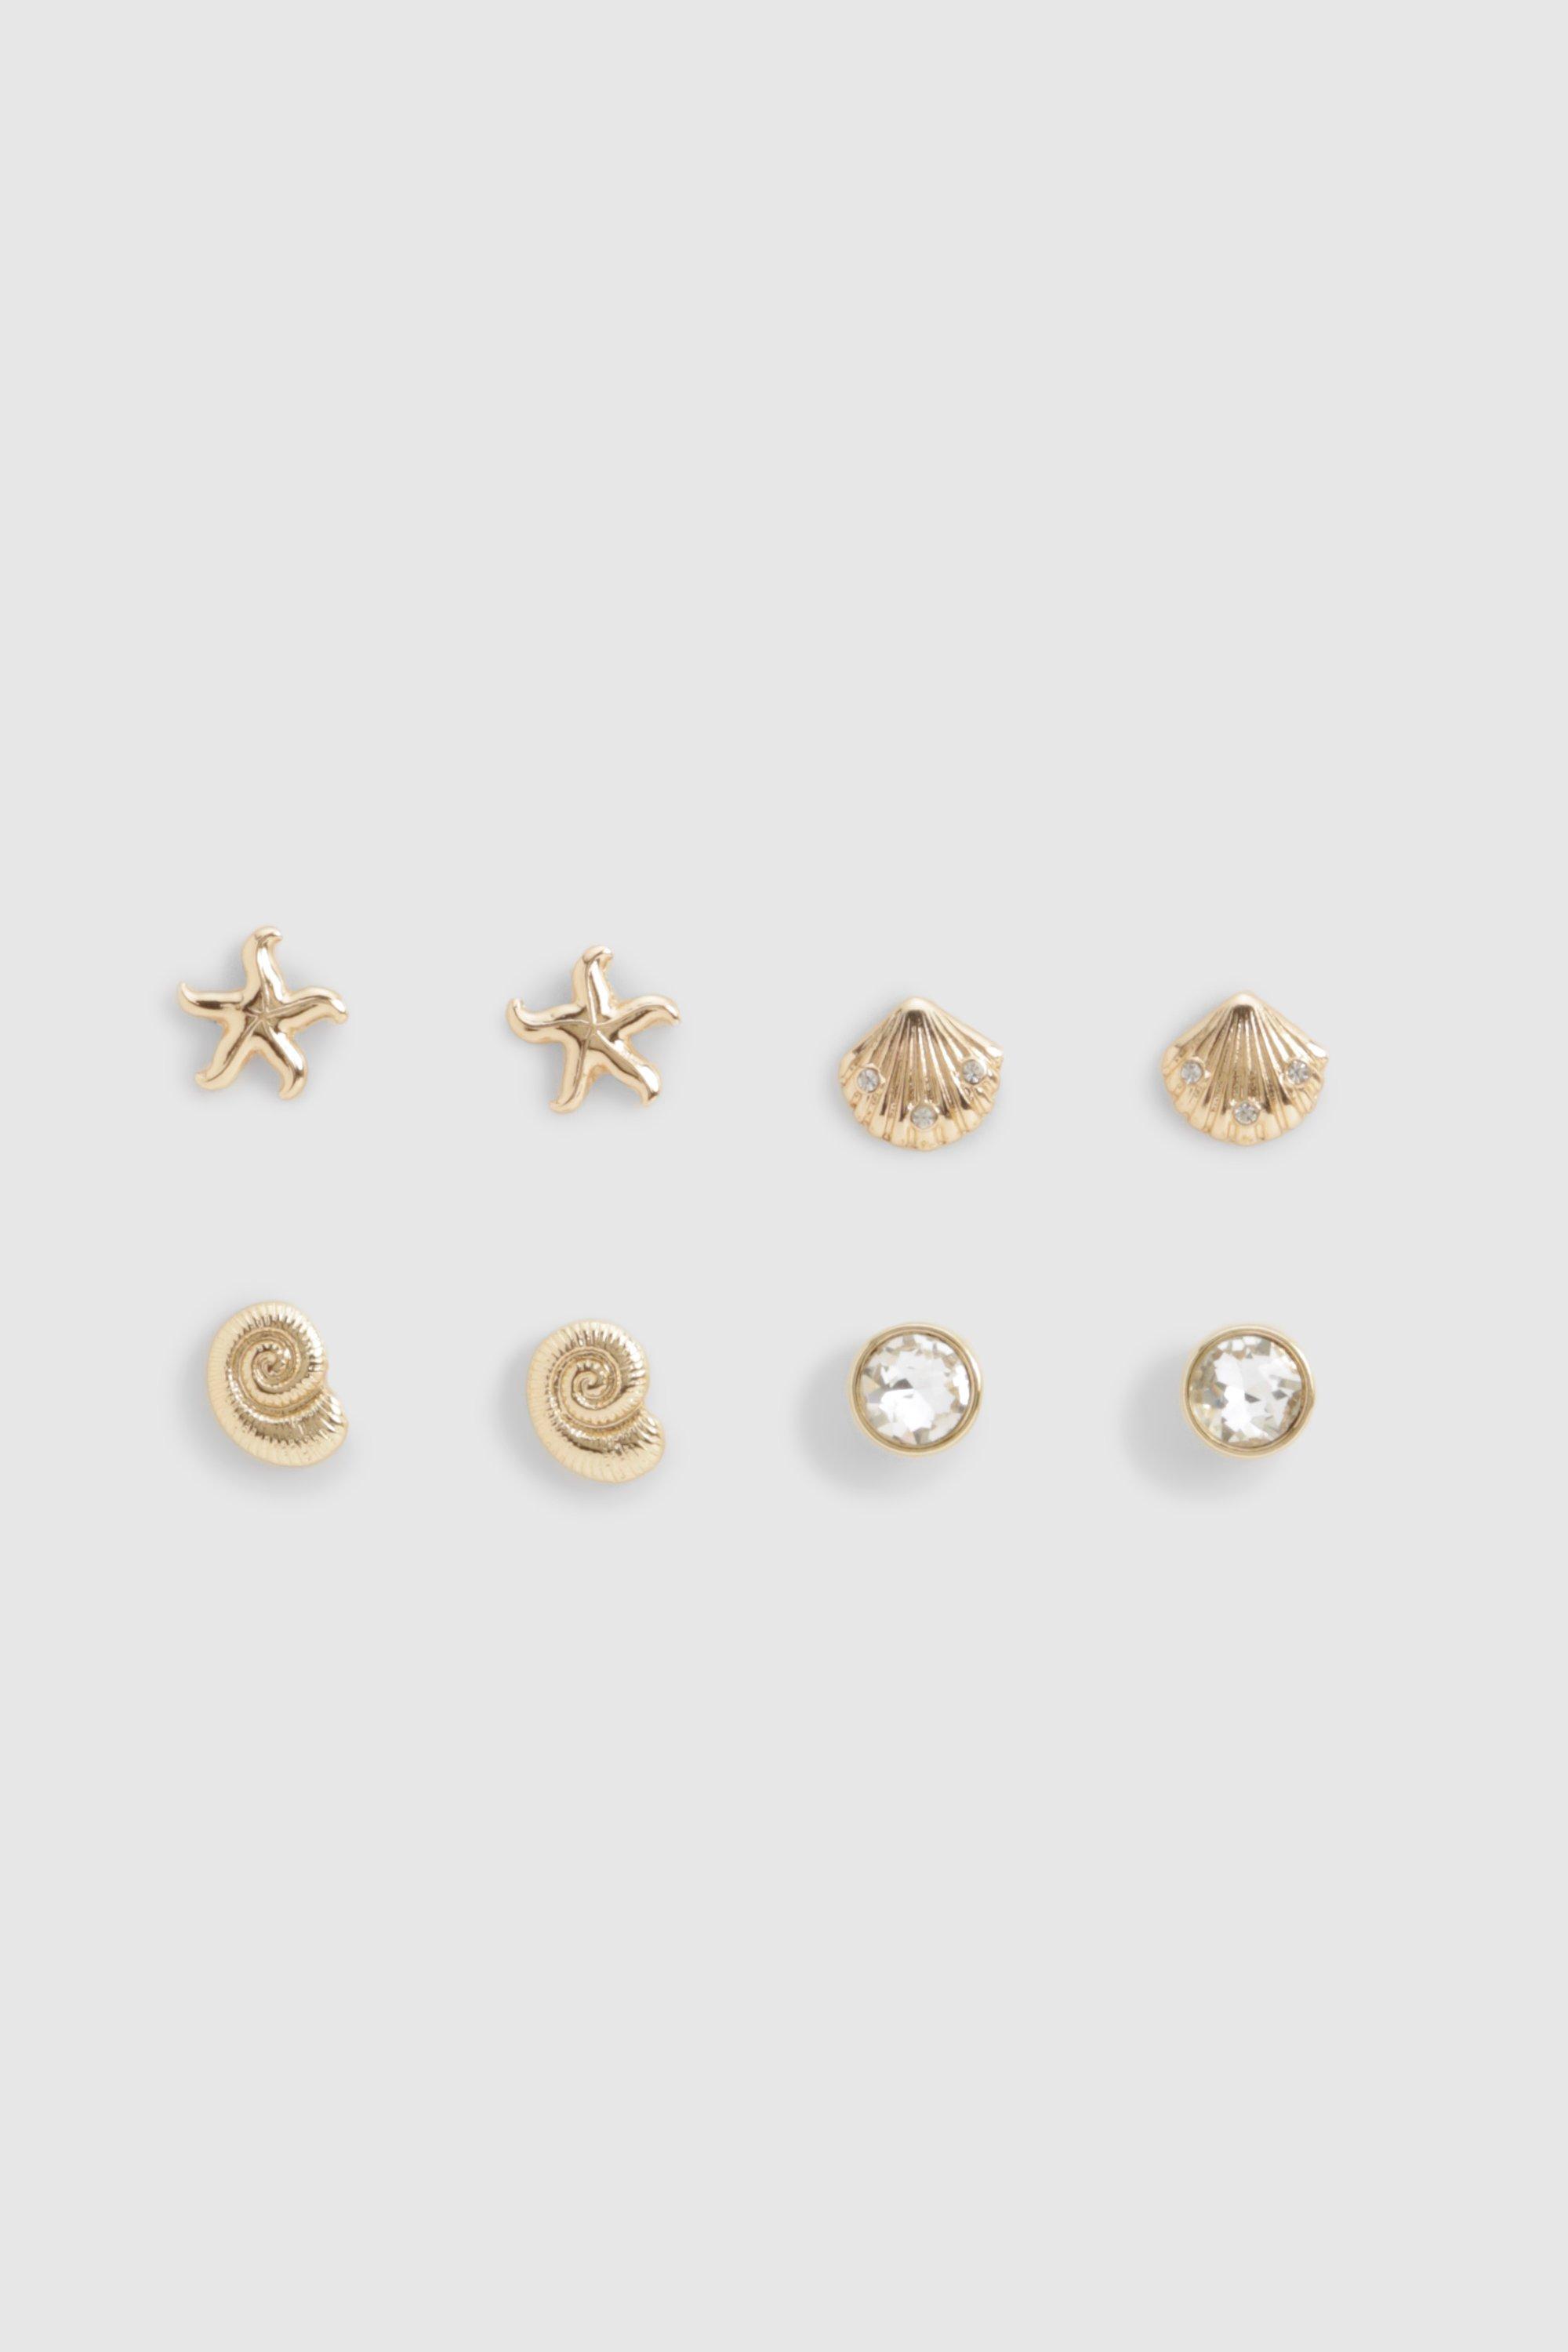 Image of Gold Seashell Stud Earrings 4 Pack, Metallics